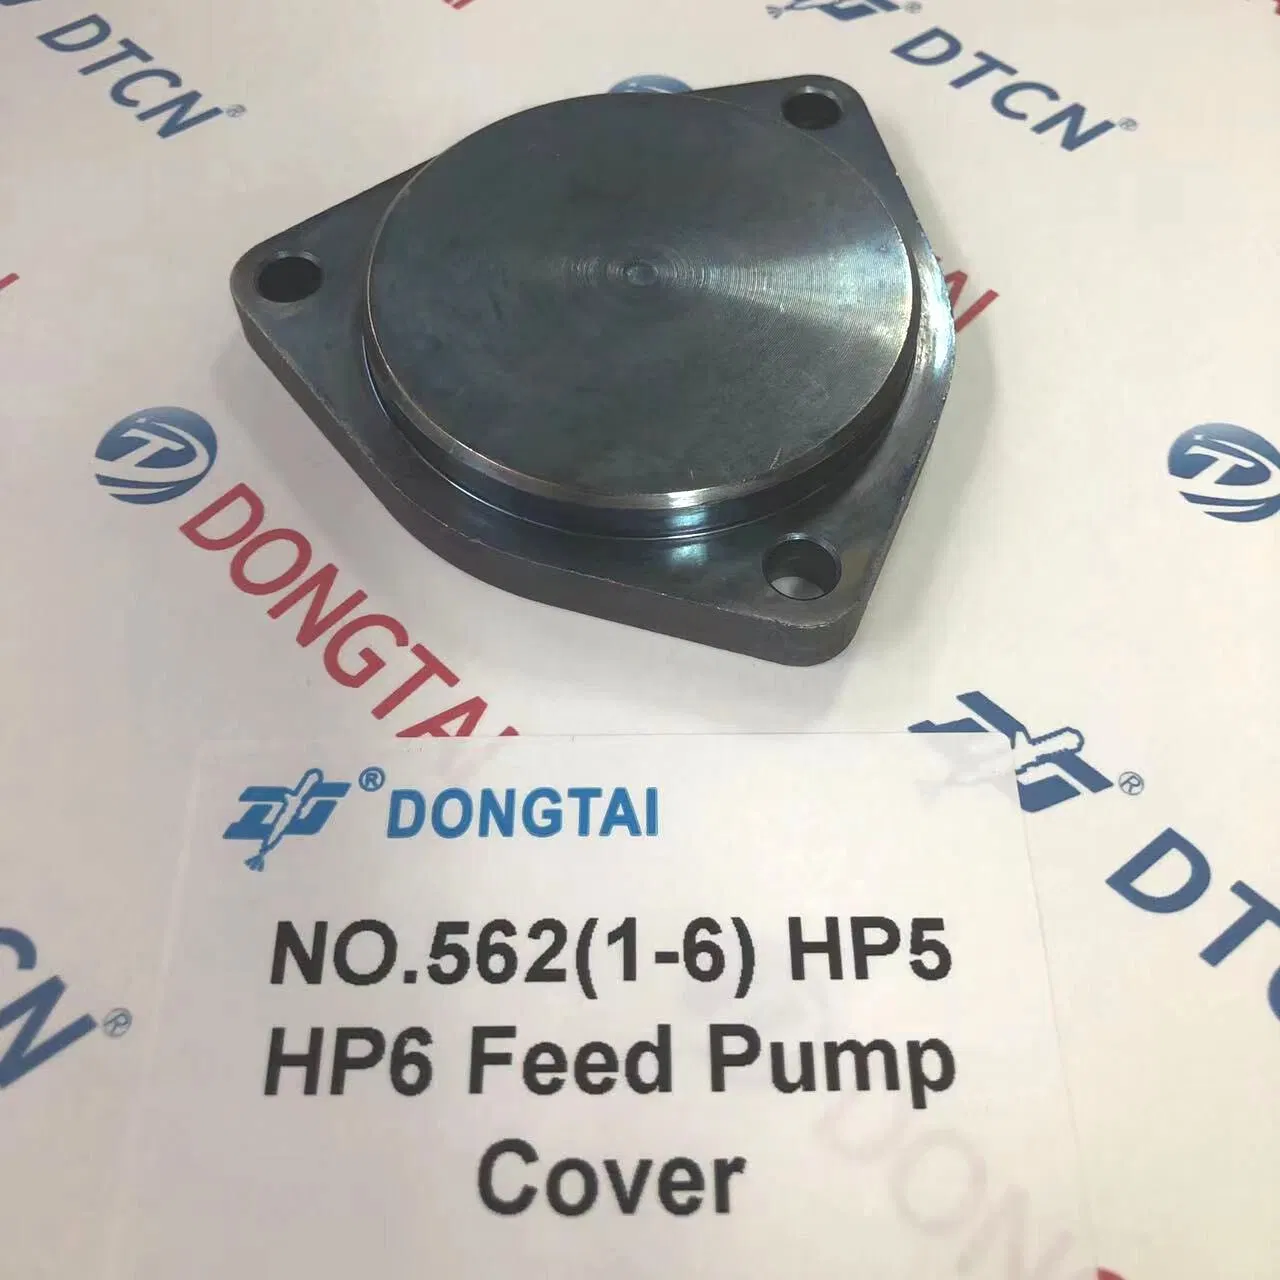 No. 562 (1-6) HP5 HP6 Feed Pump Cover